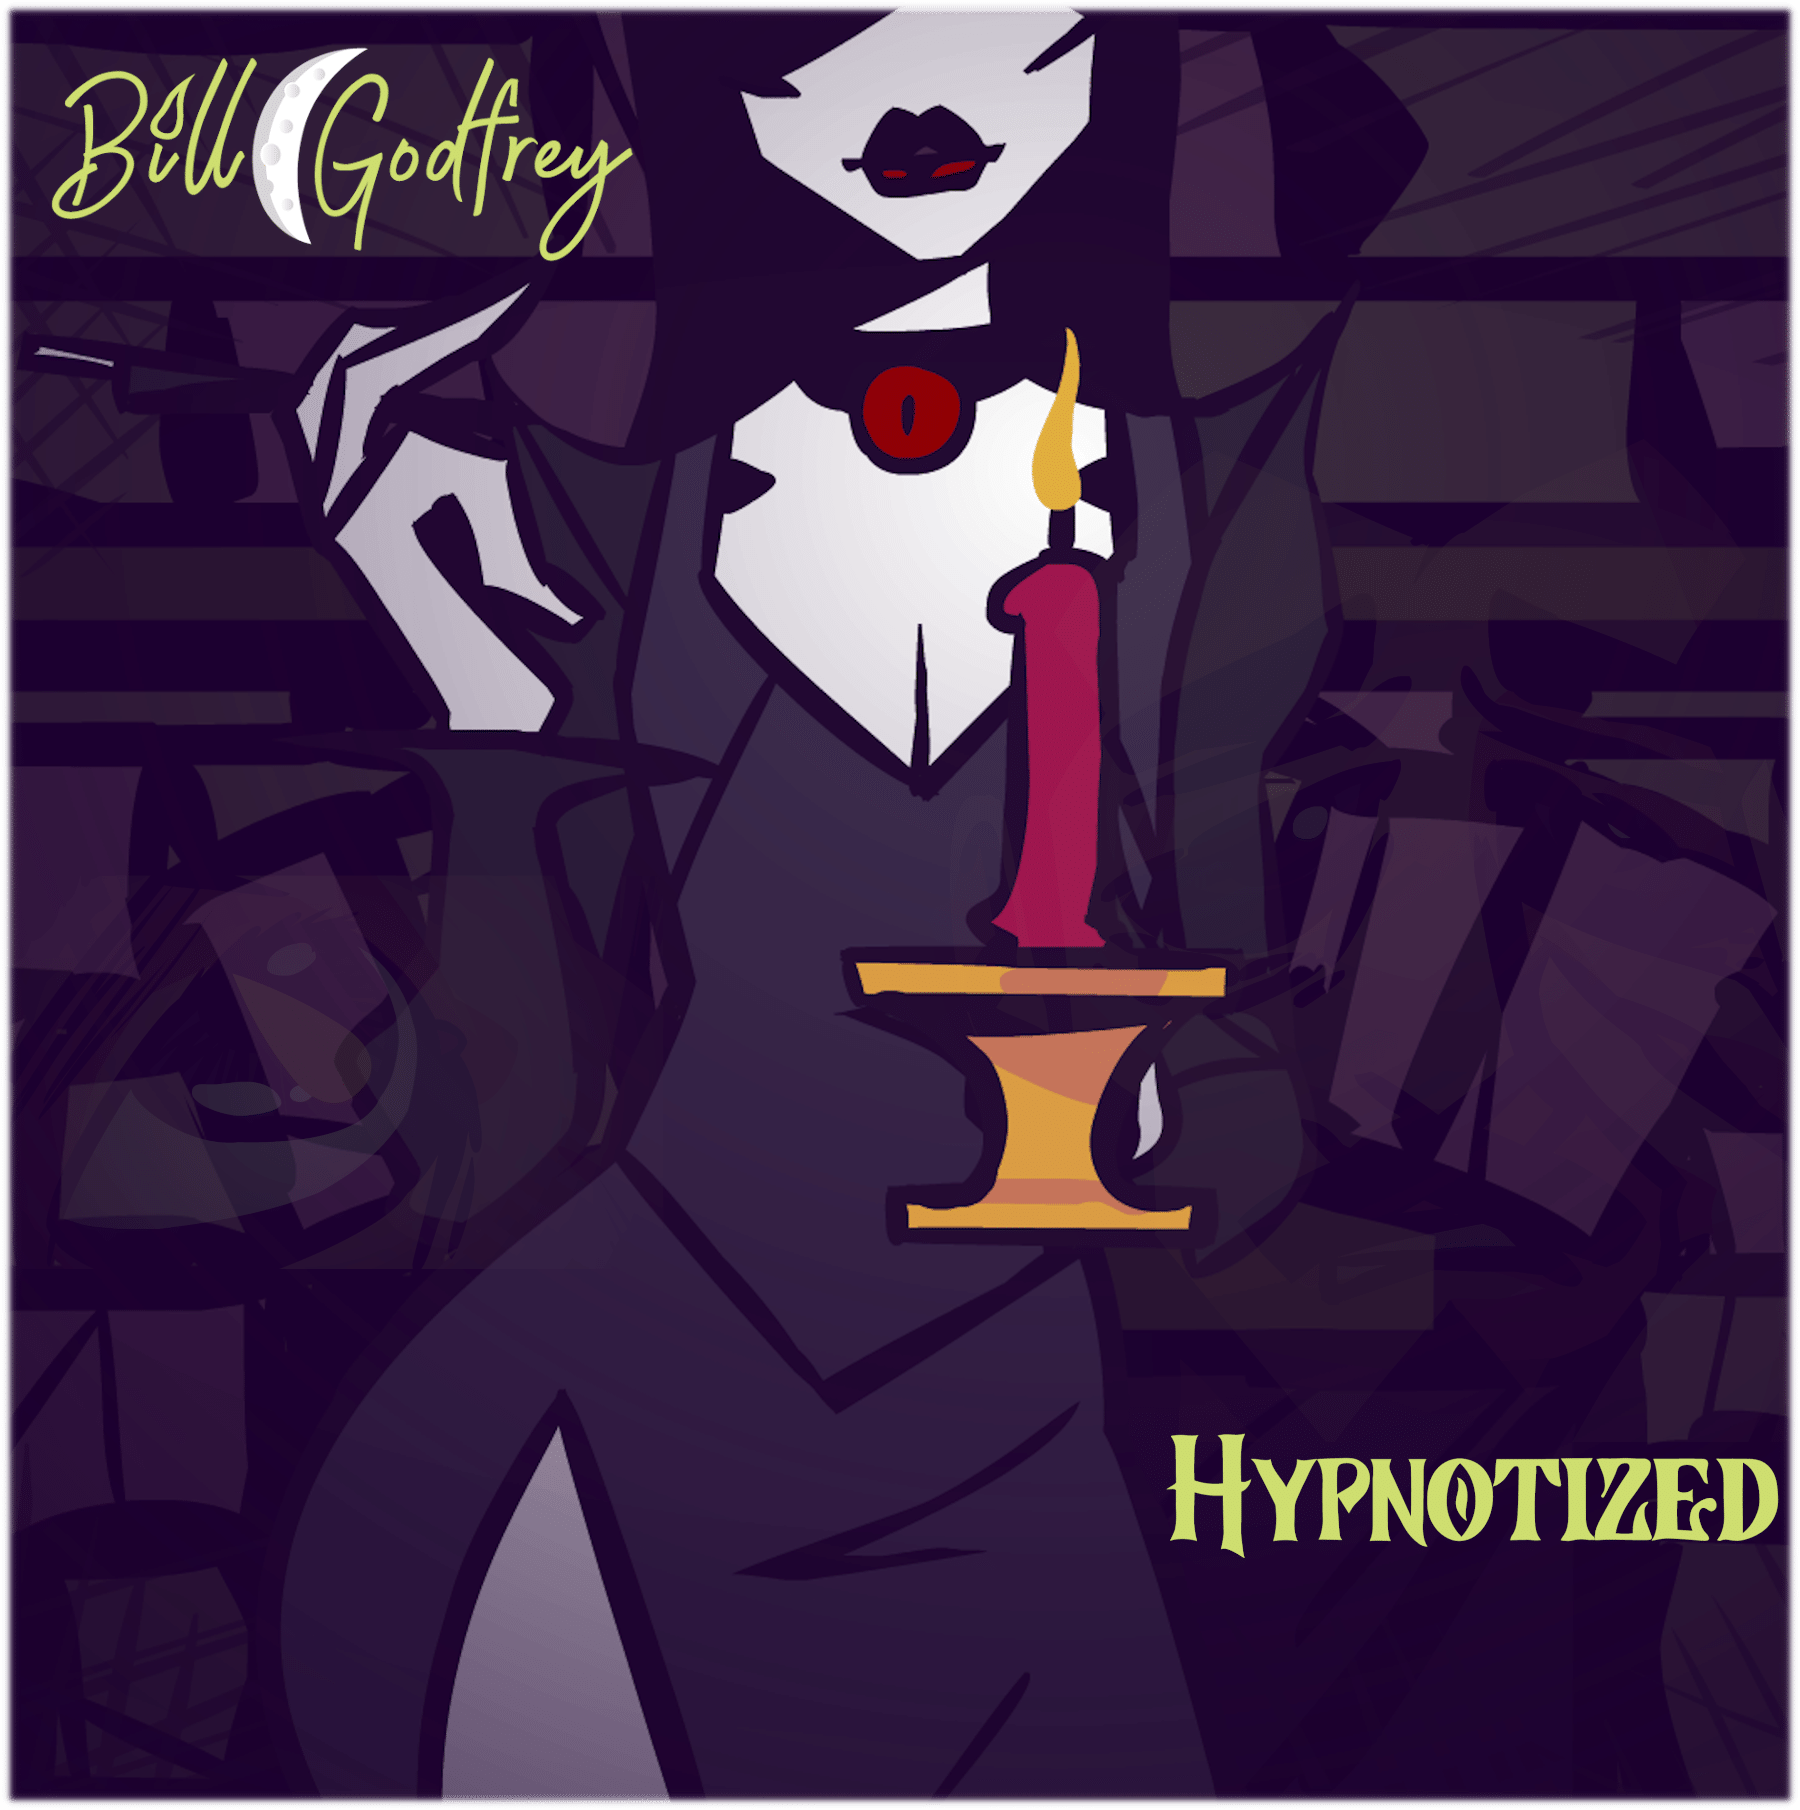 Album cover of the debut album Hypnotized